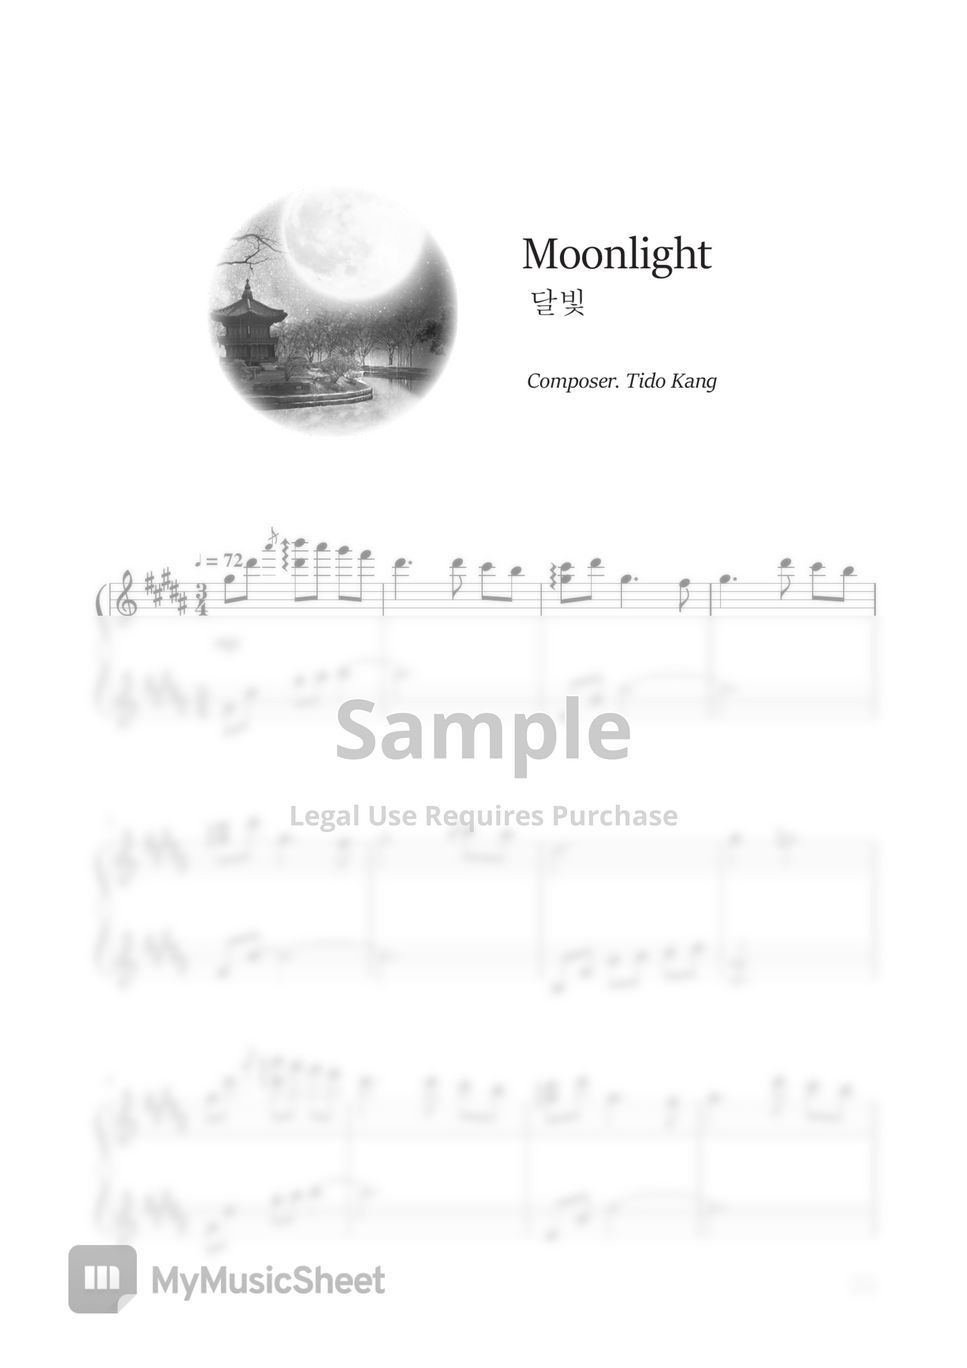 Tido Kang - Moonlight